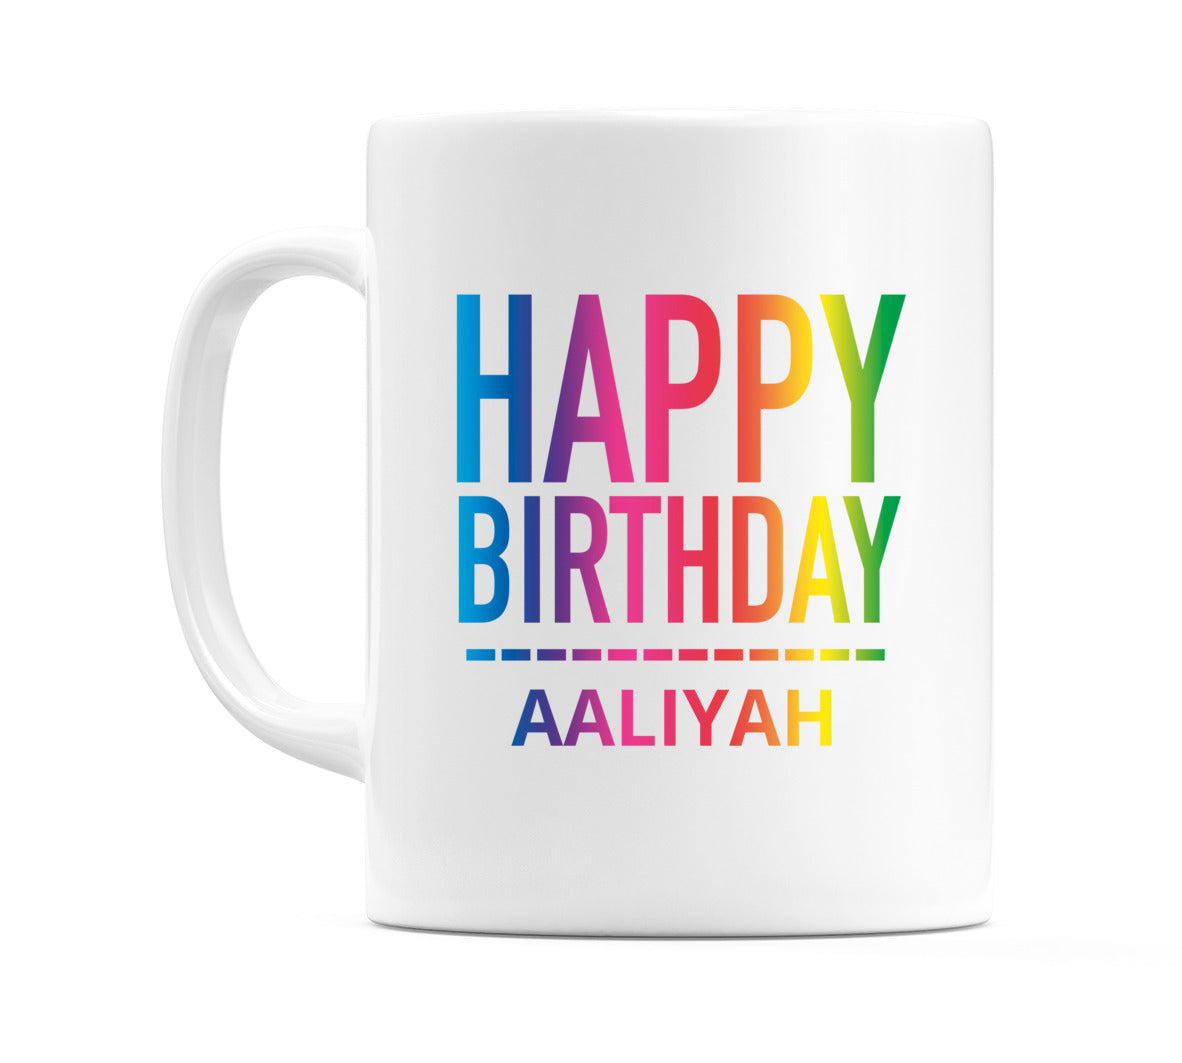 Happy Birthday Aaliyah (Rainbow) Mug Cup by WeDoMugs